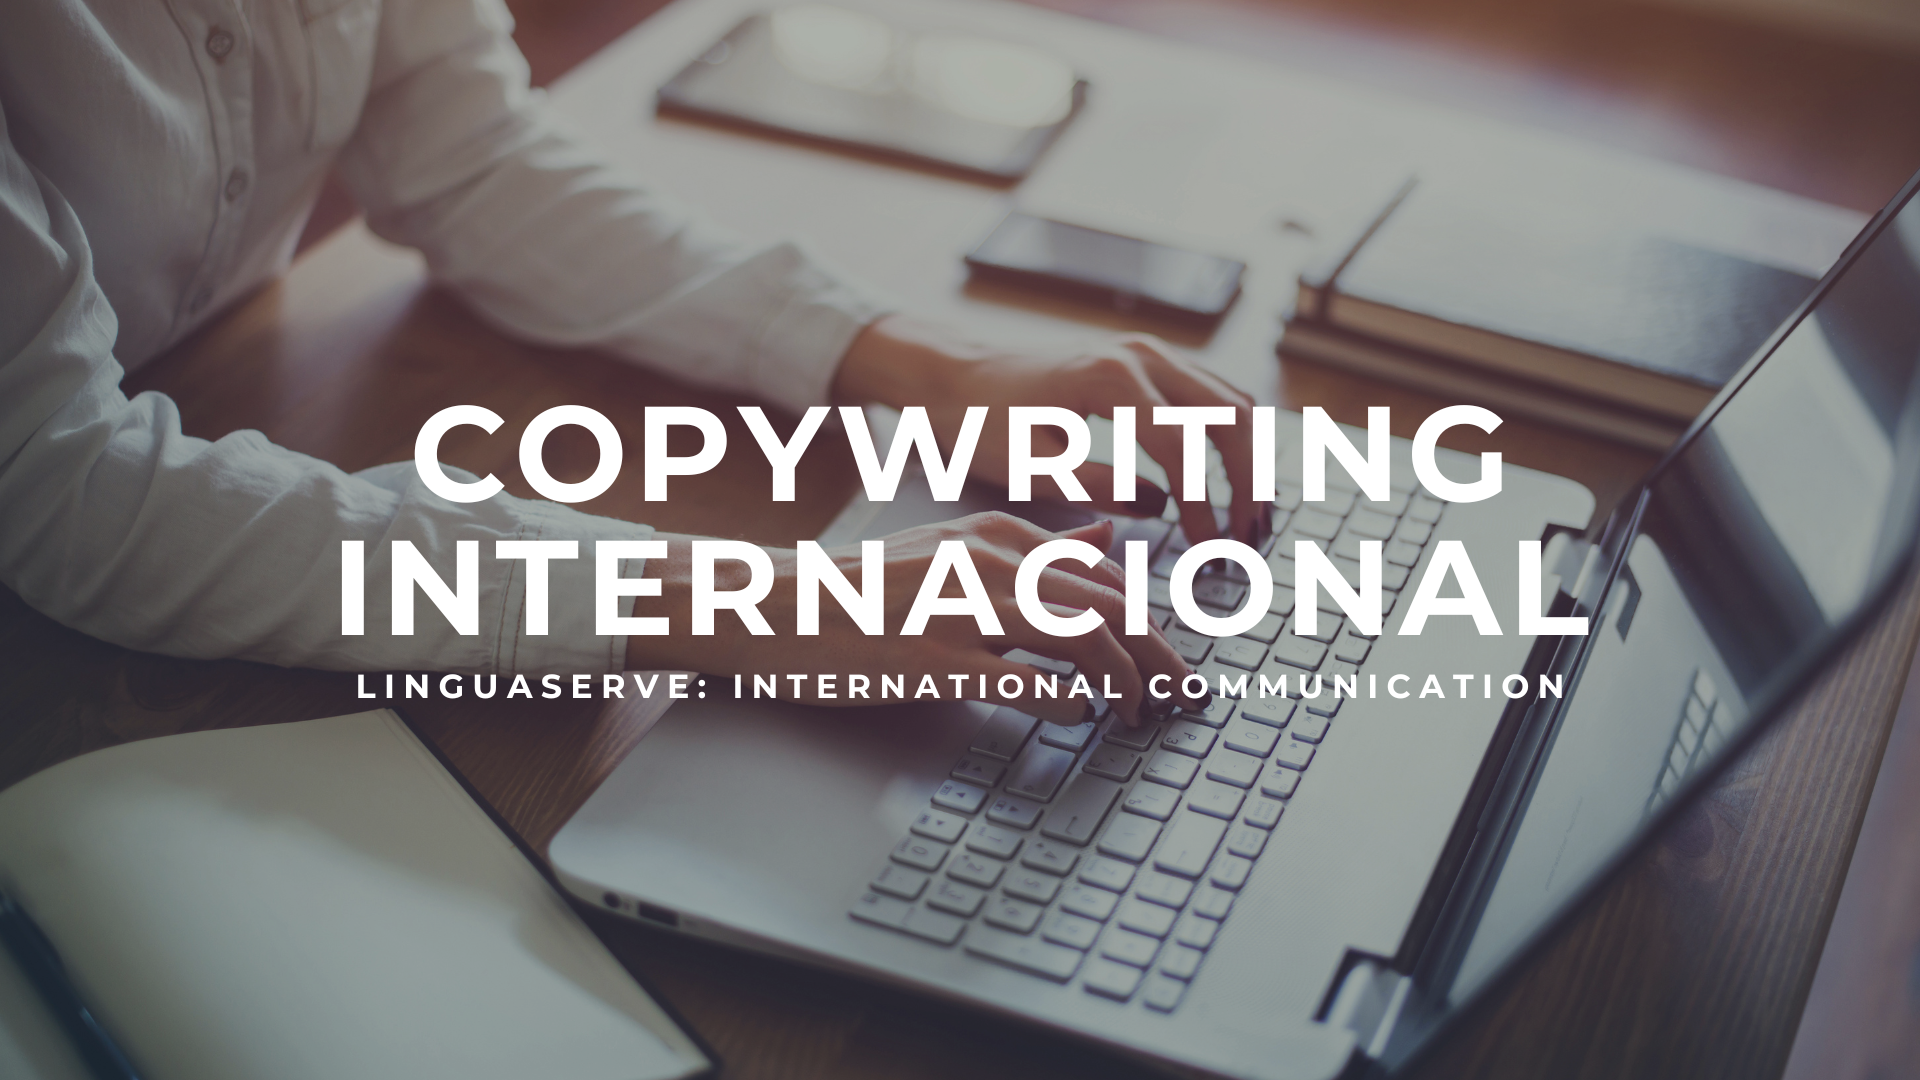 Servicio de copywriting internacional: técnicas y principios útiles